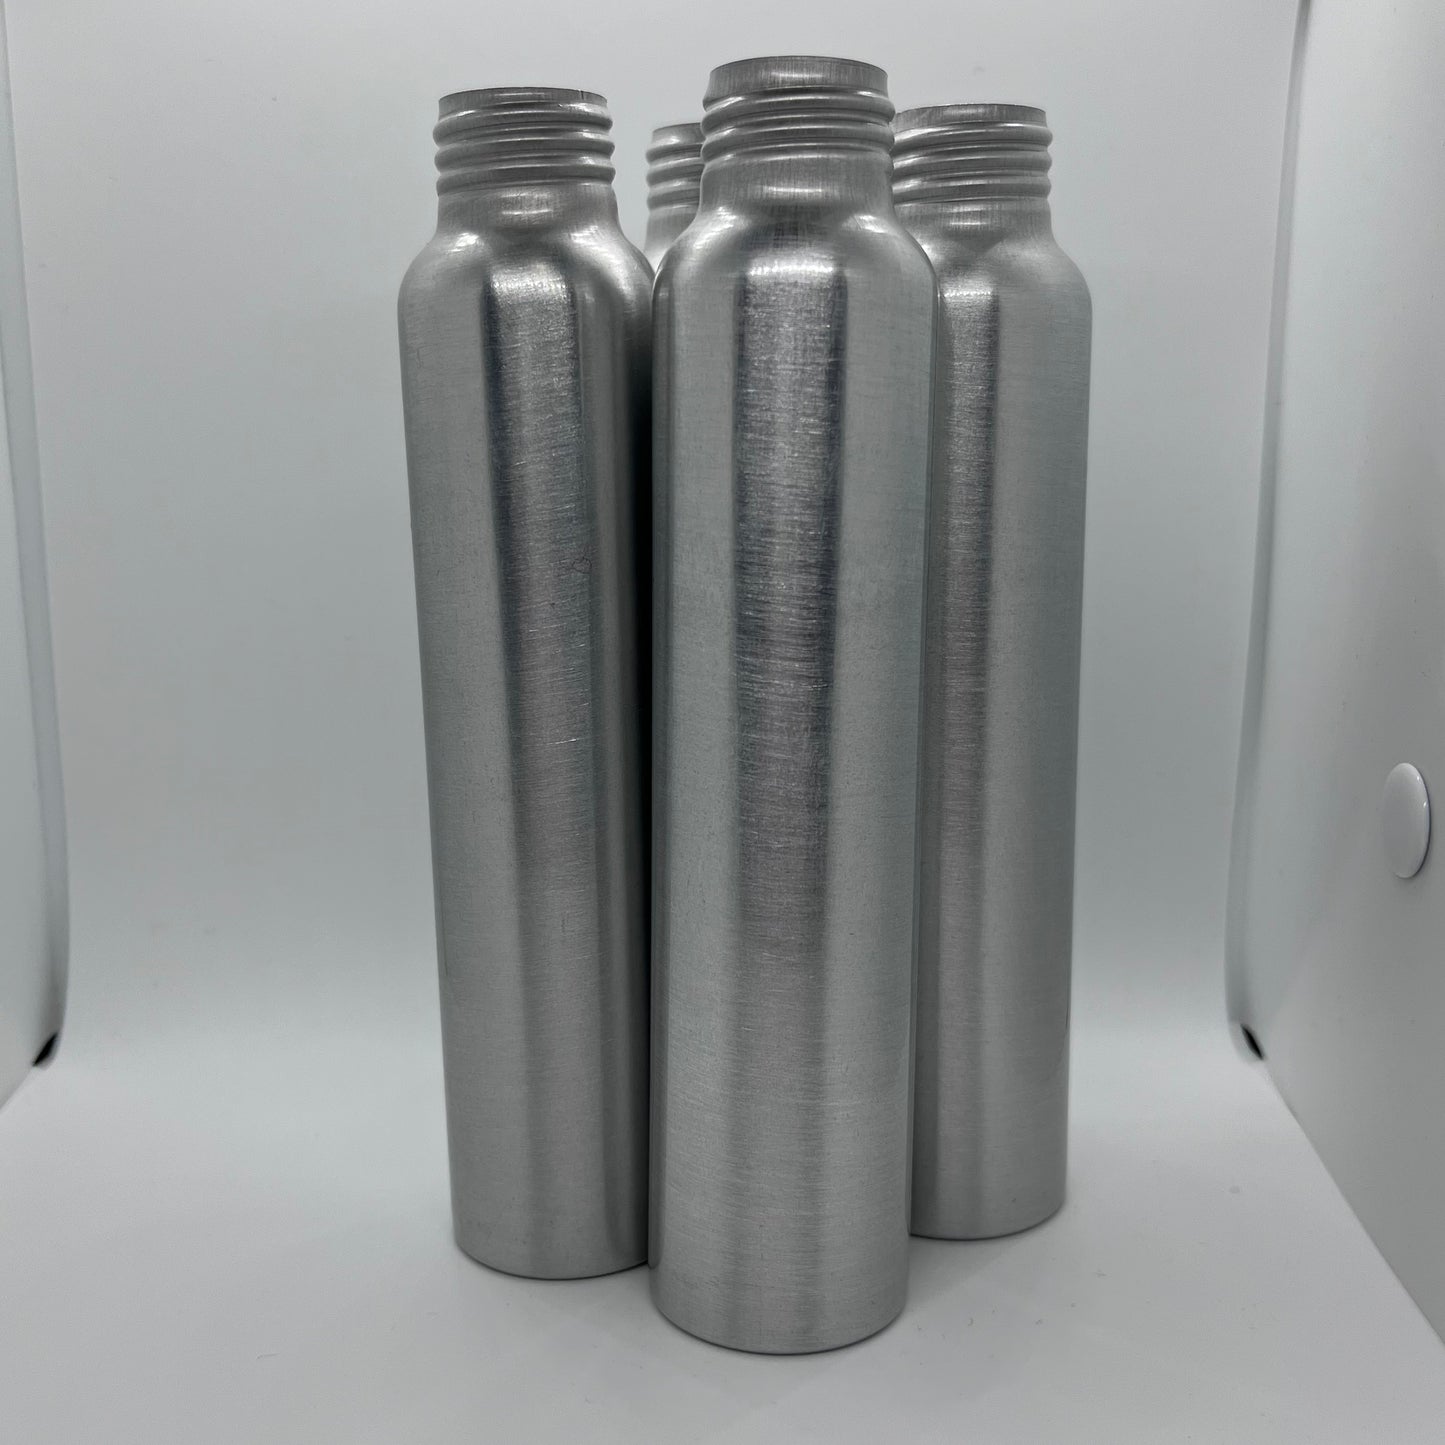 Aluminum Bottles With Sprayers